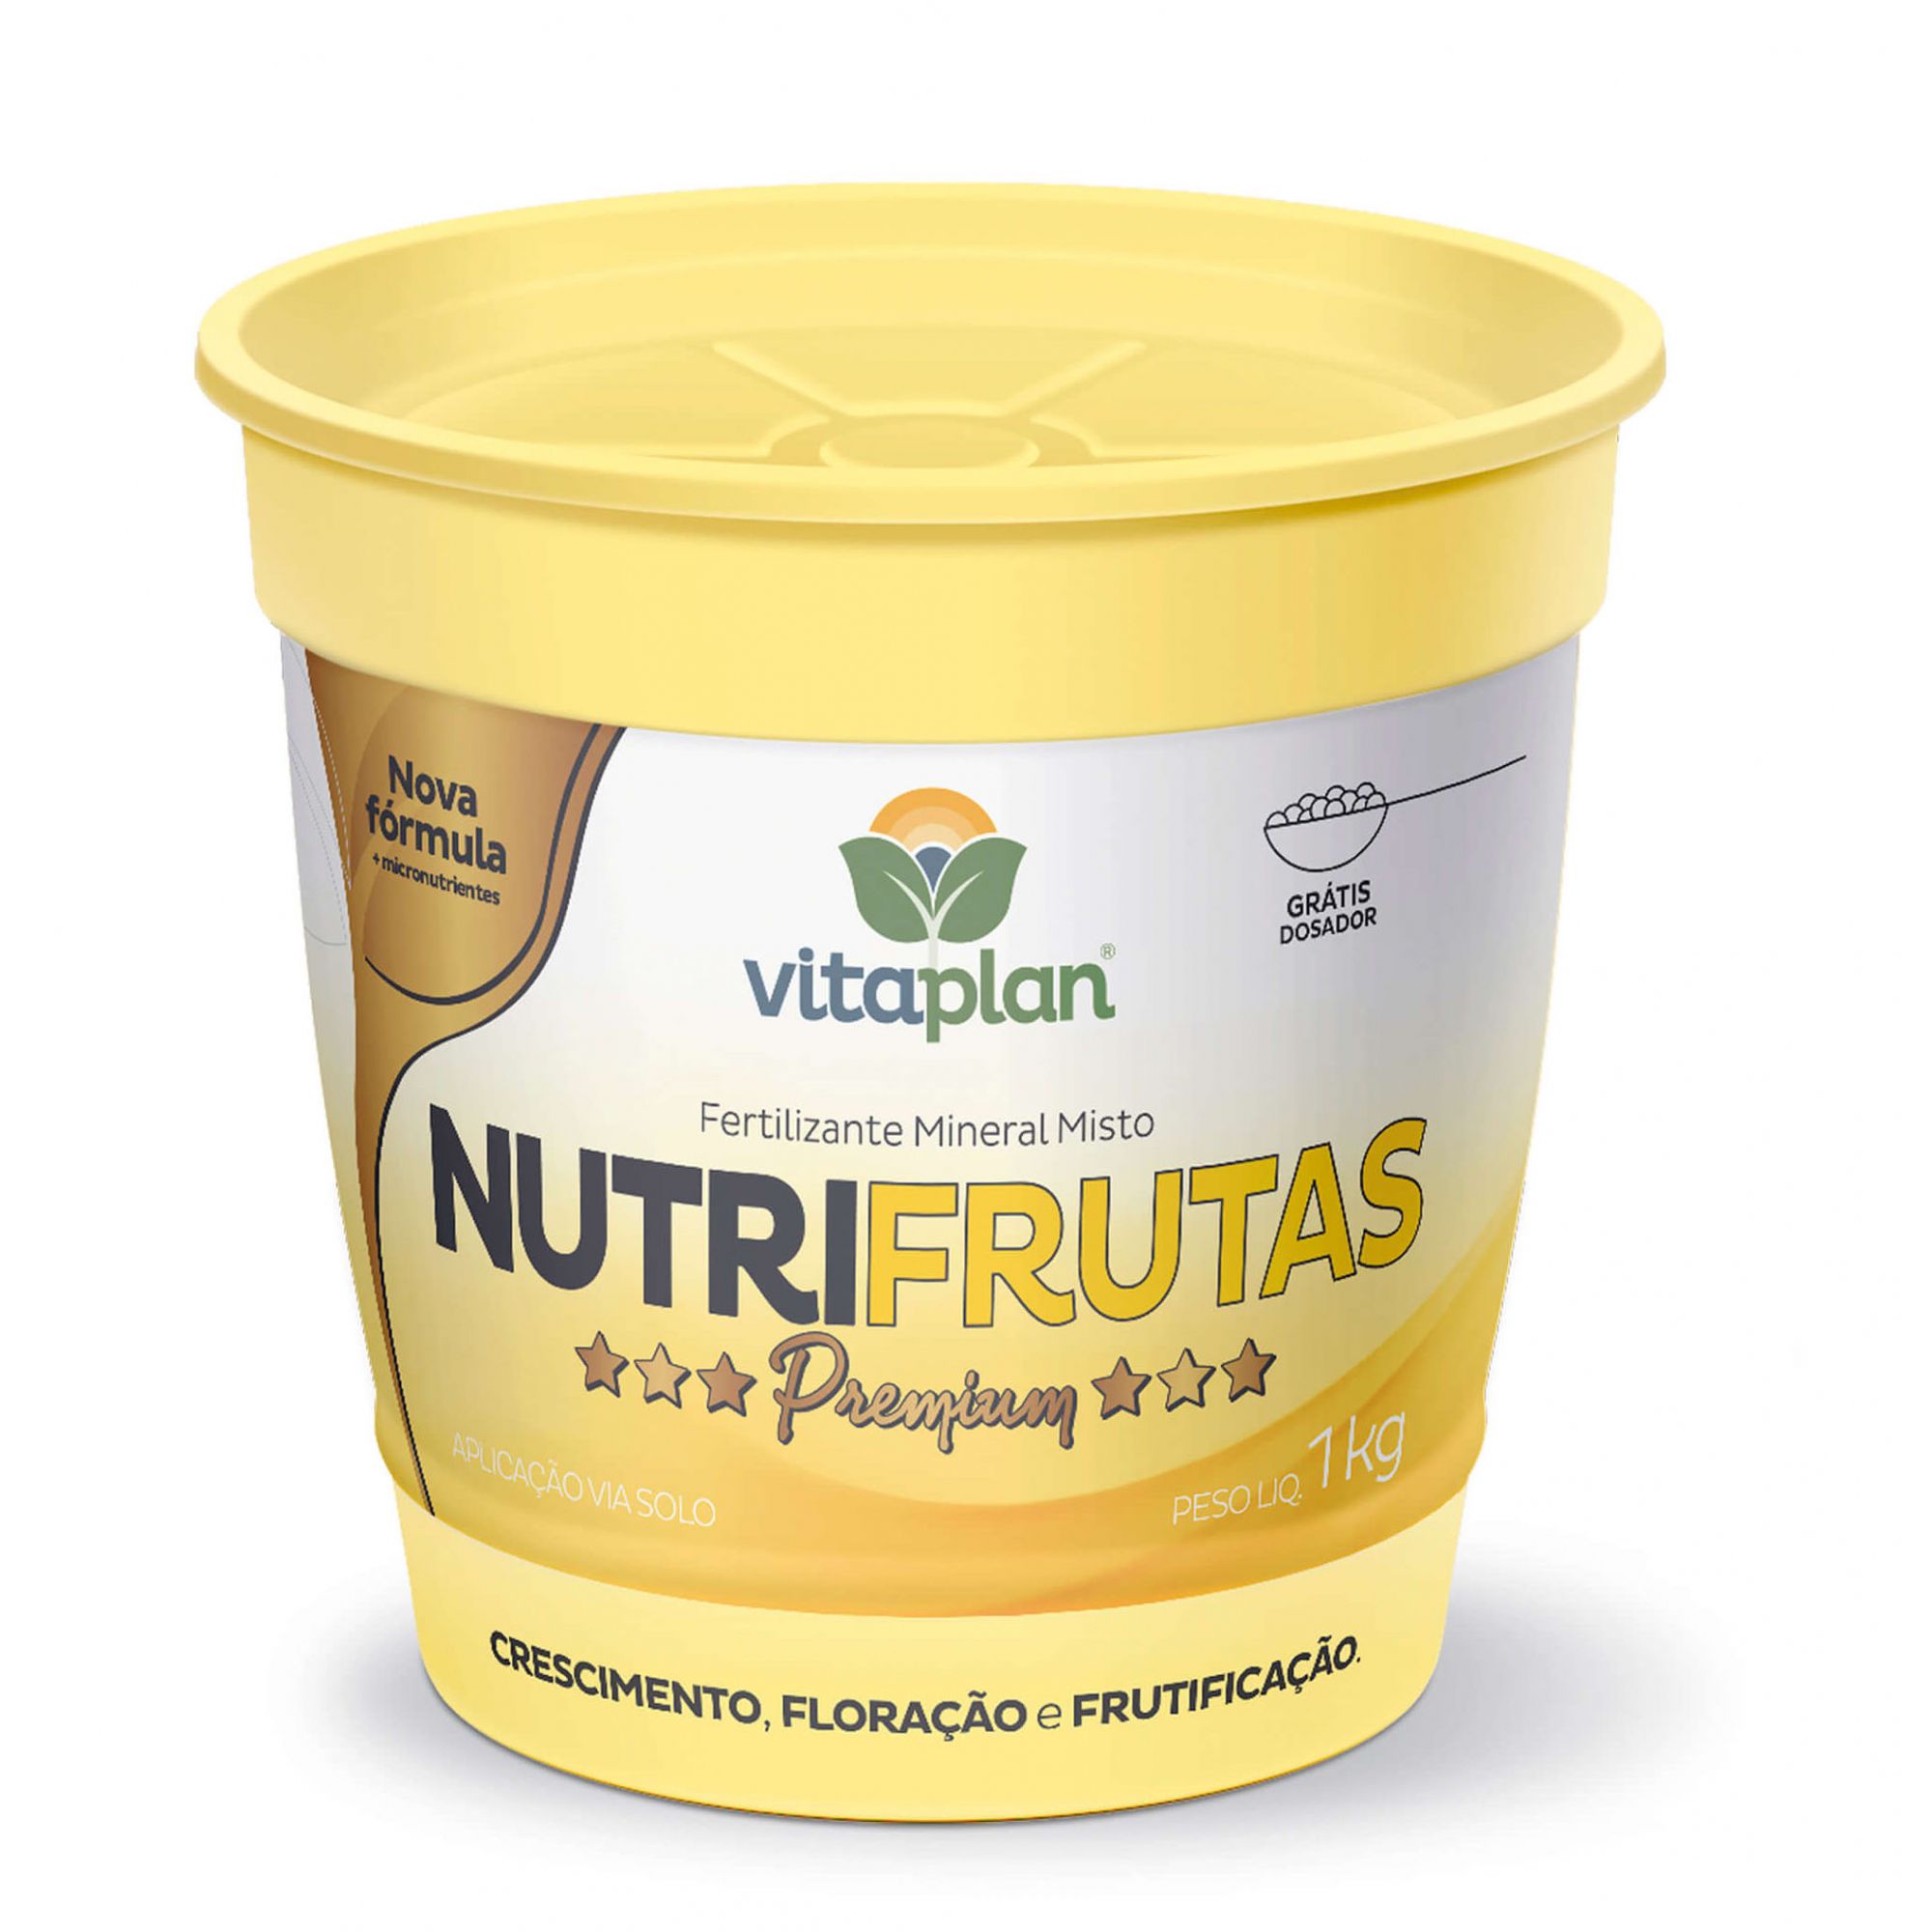 Fertilizante Mineral Misto Nutrifrutas 1kg - Vitaplan Premium